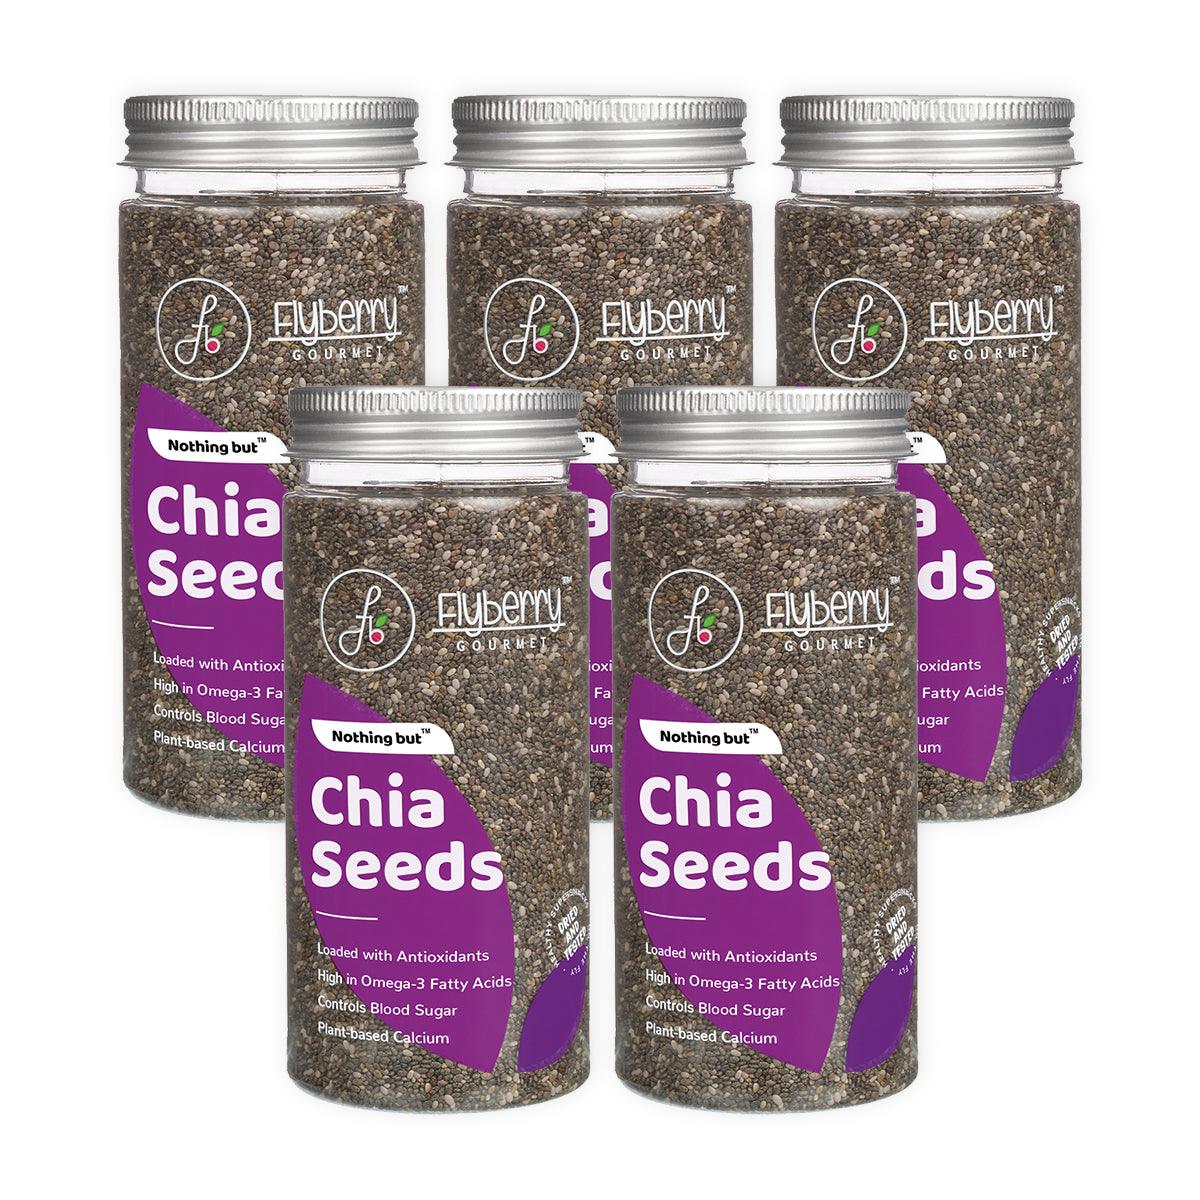 Chia Seeds - Wildermart